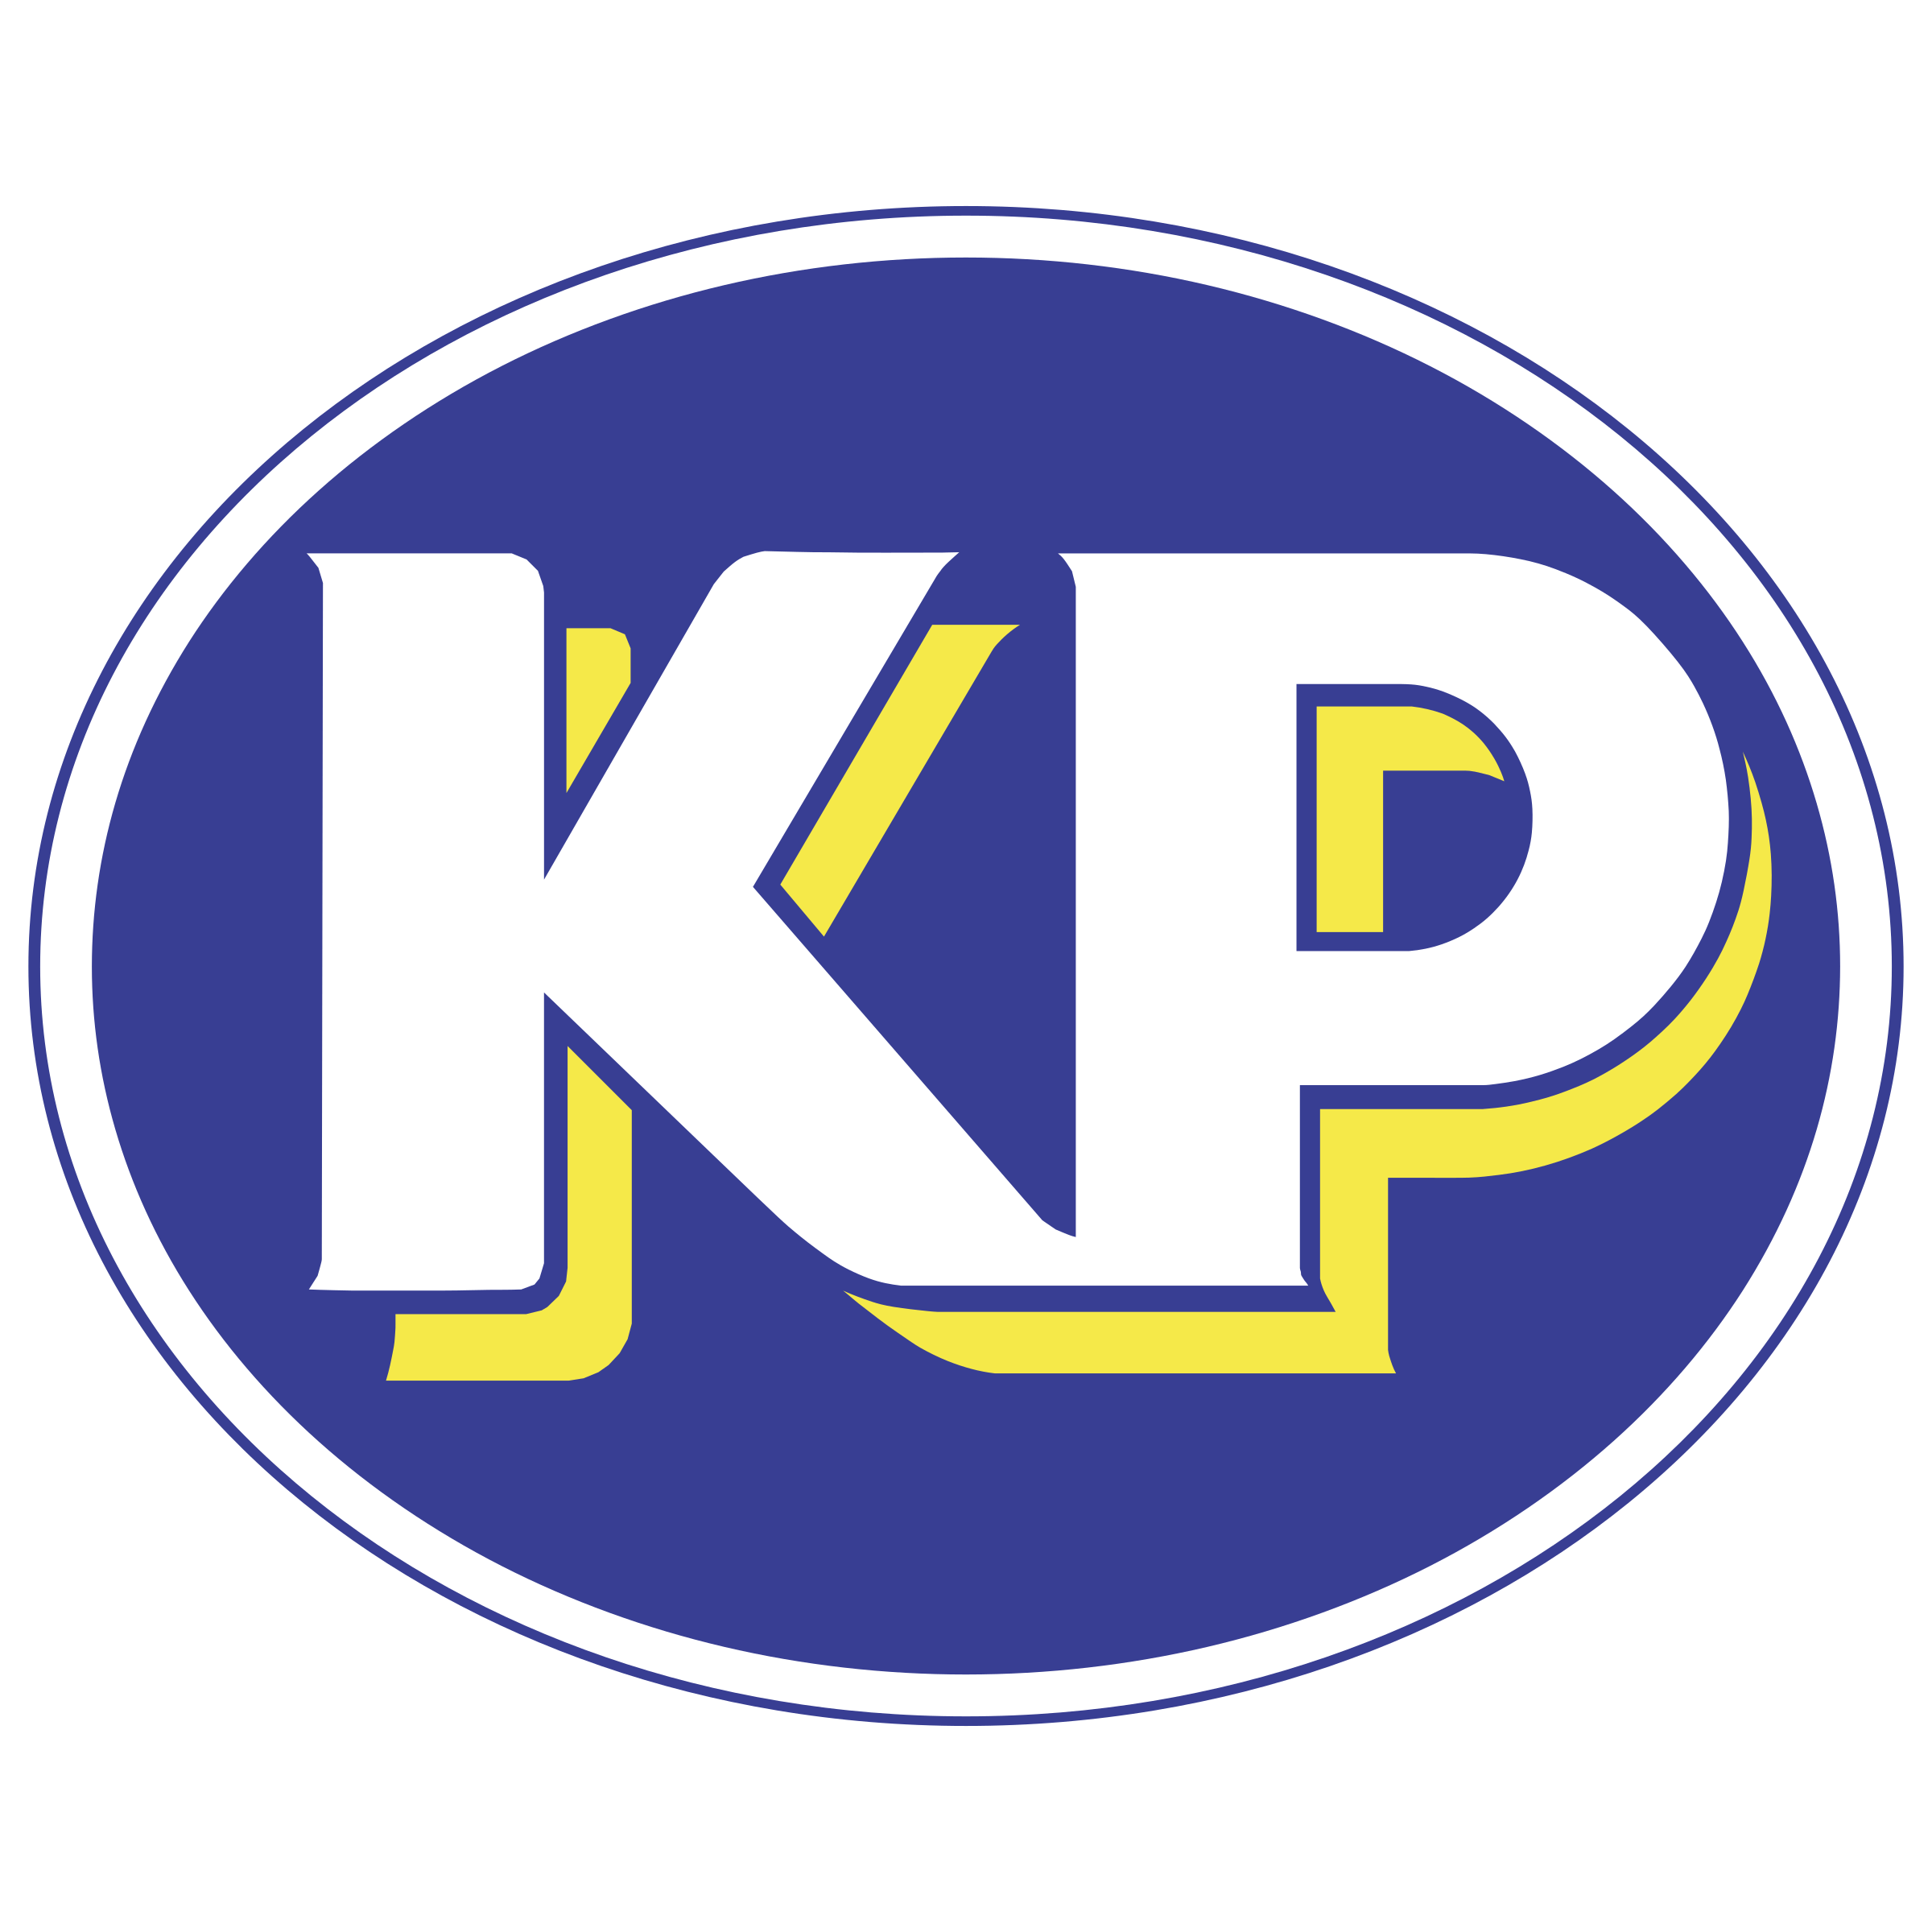 KP Logo - KP Logo PNG Transparent & SVG Vector